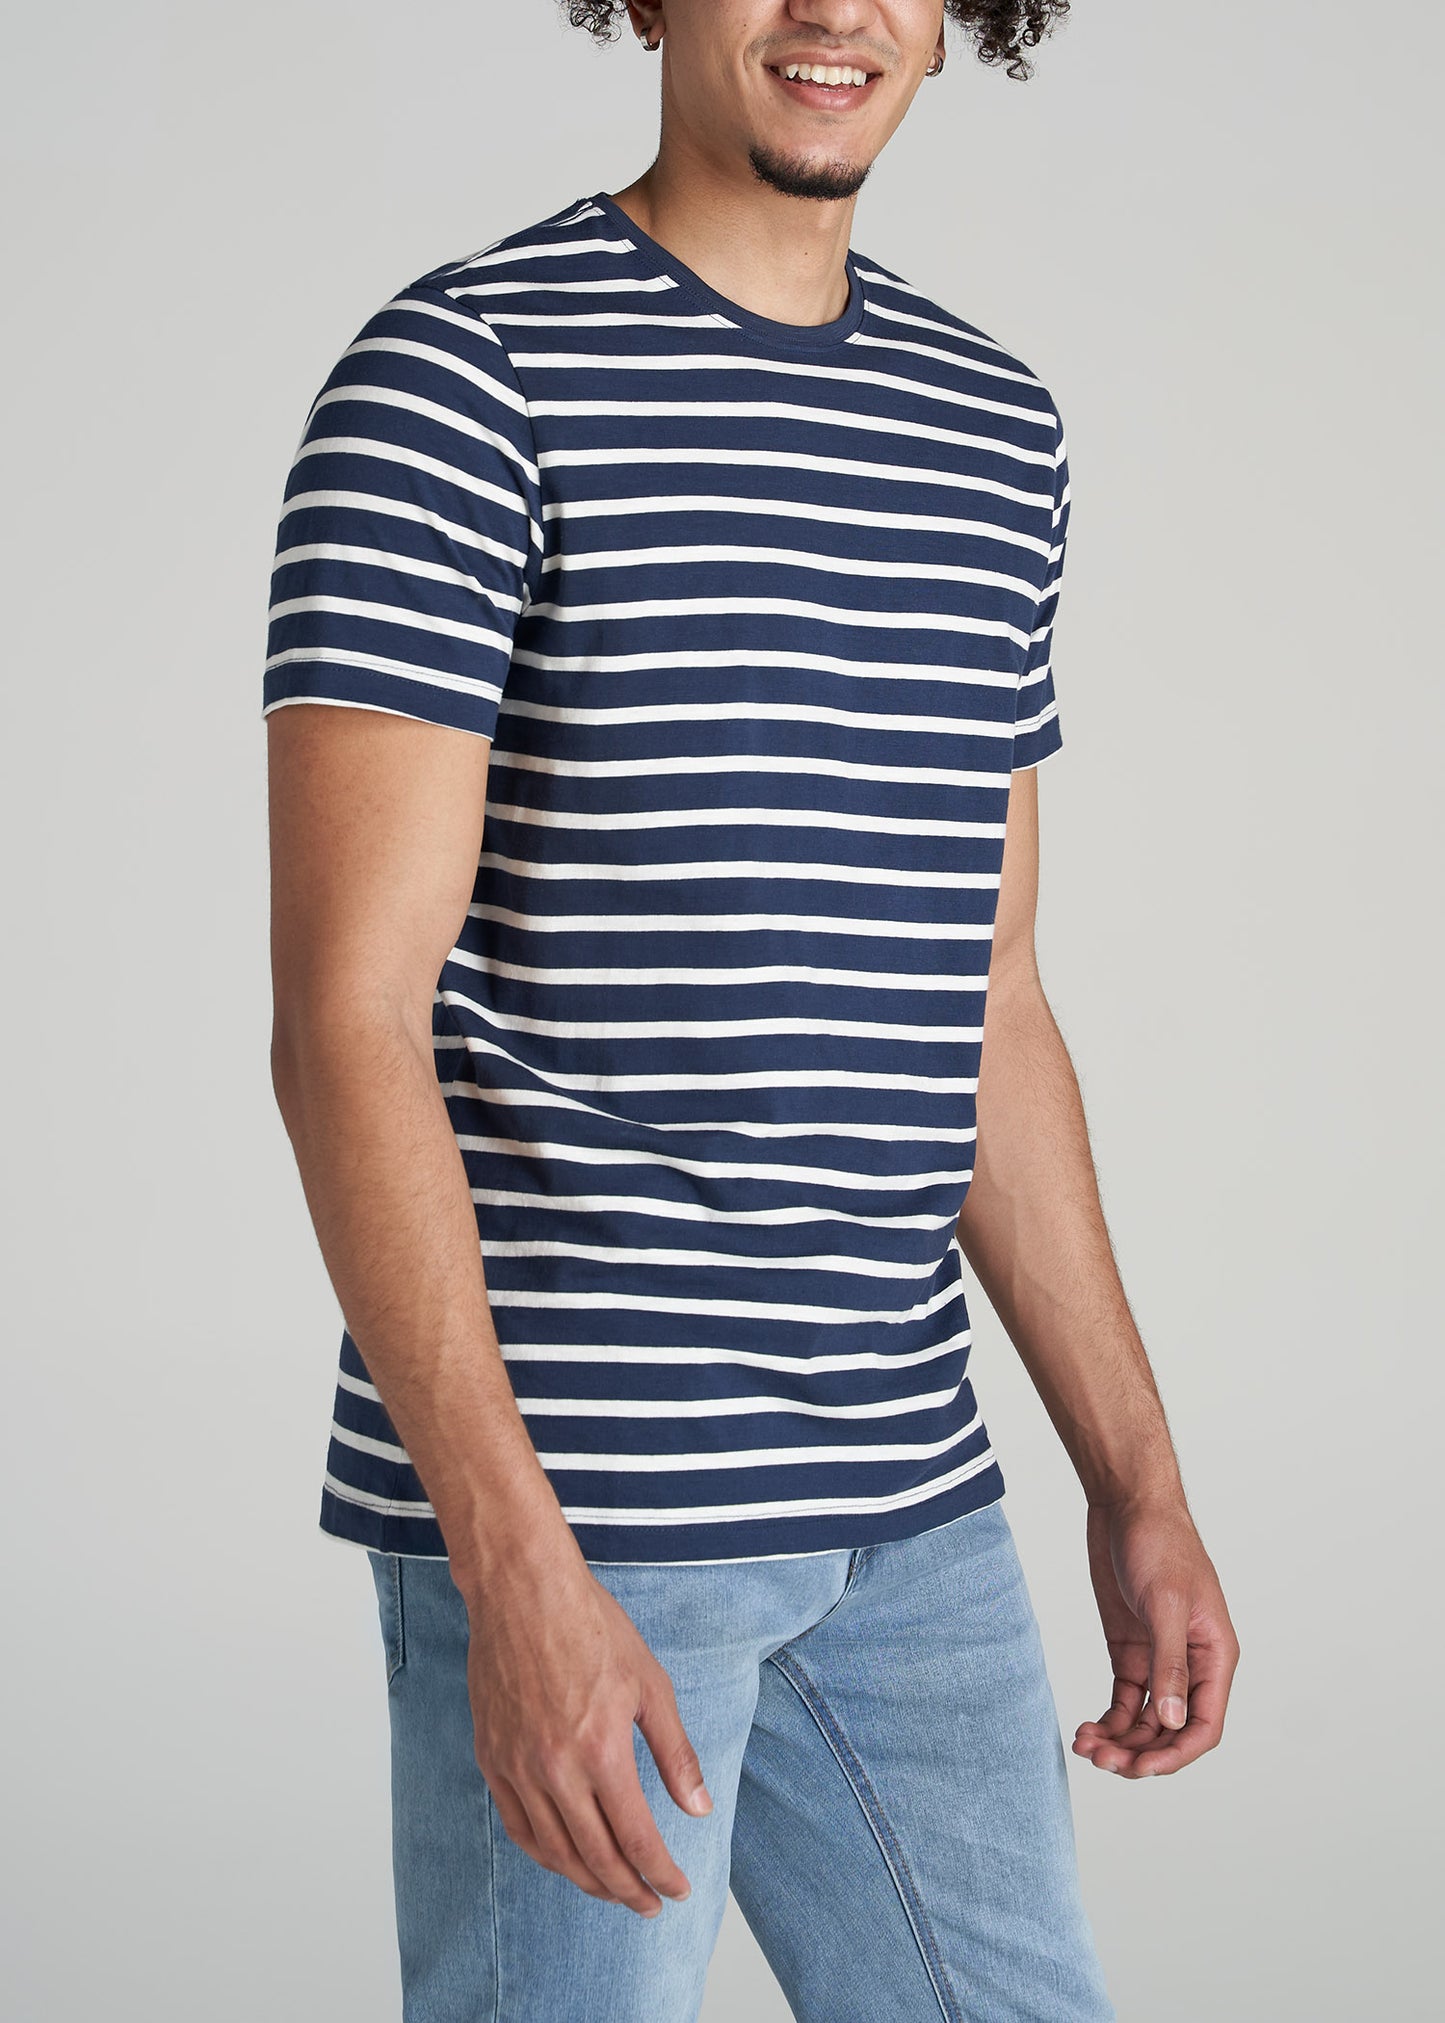       American-Tall-Men-Striped-Tee-Navy-White-Stripe-side